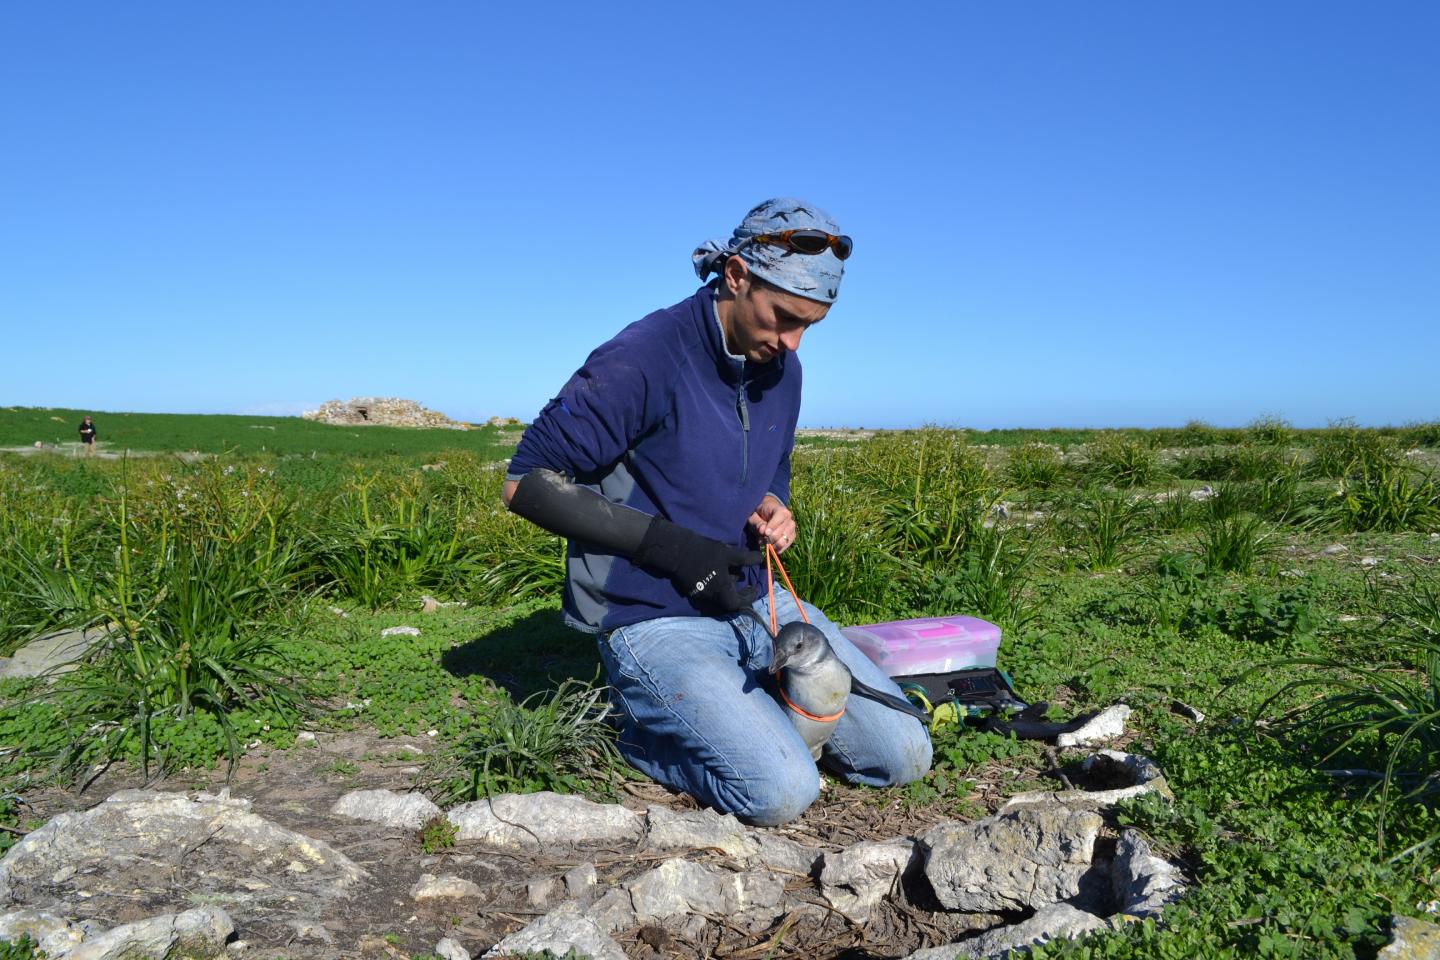 Measuring a Juvenile African penguin